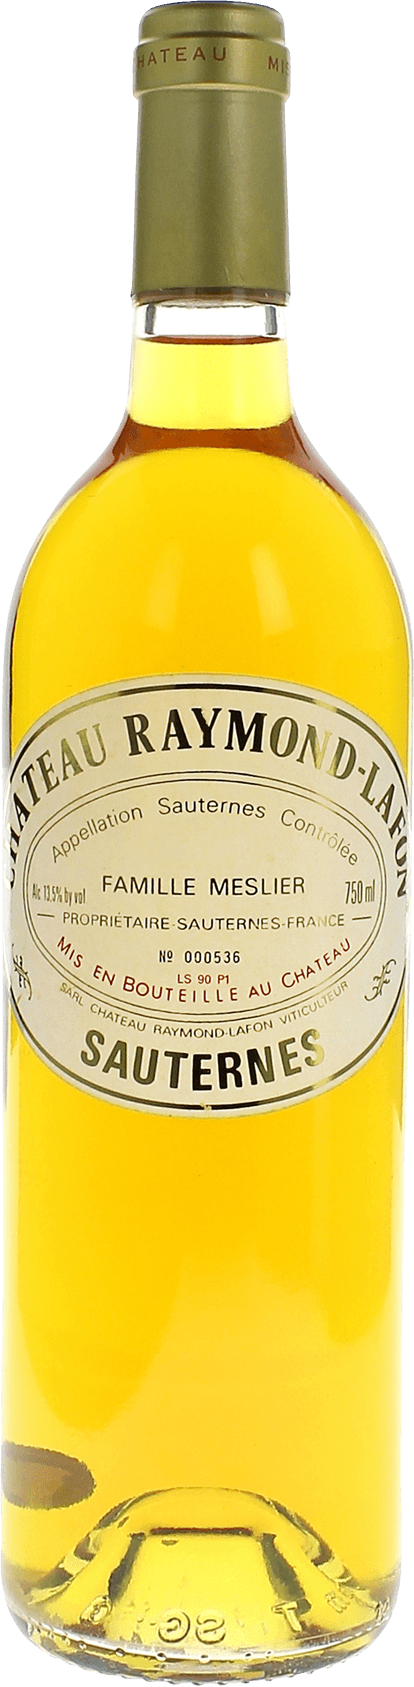 Raymond-lafon 2003 1er cru Sauternes, Bordeaux blanc